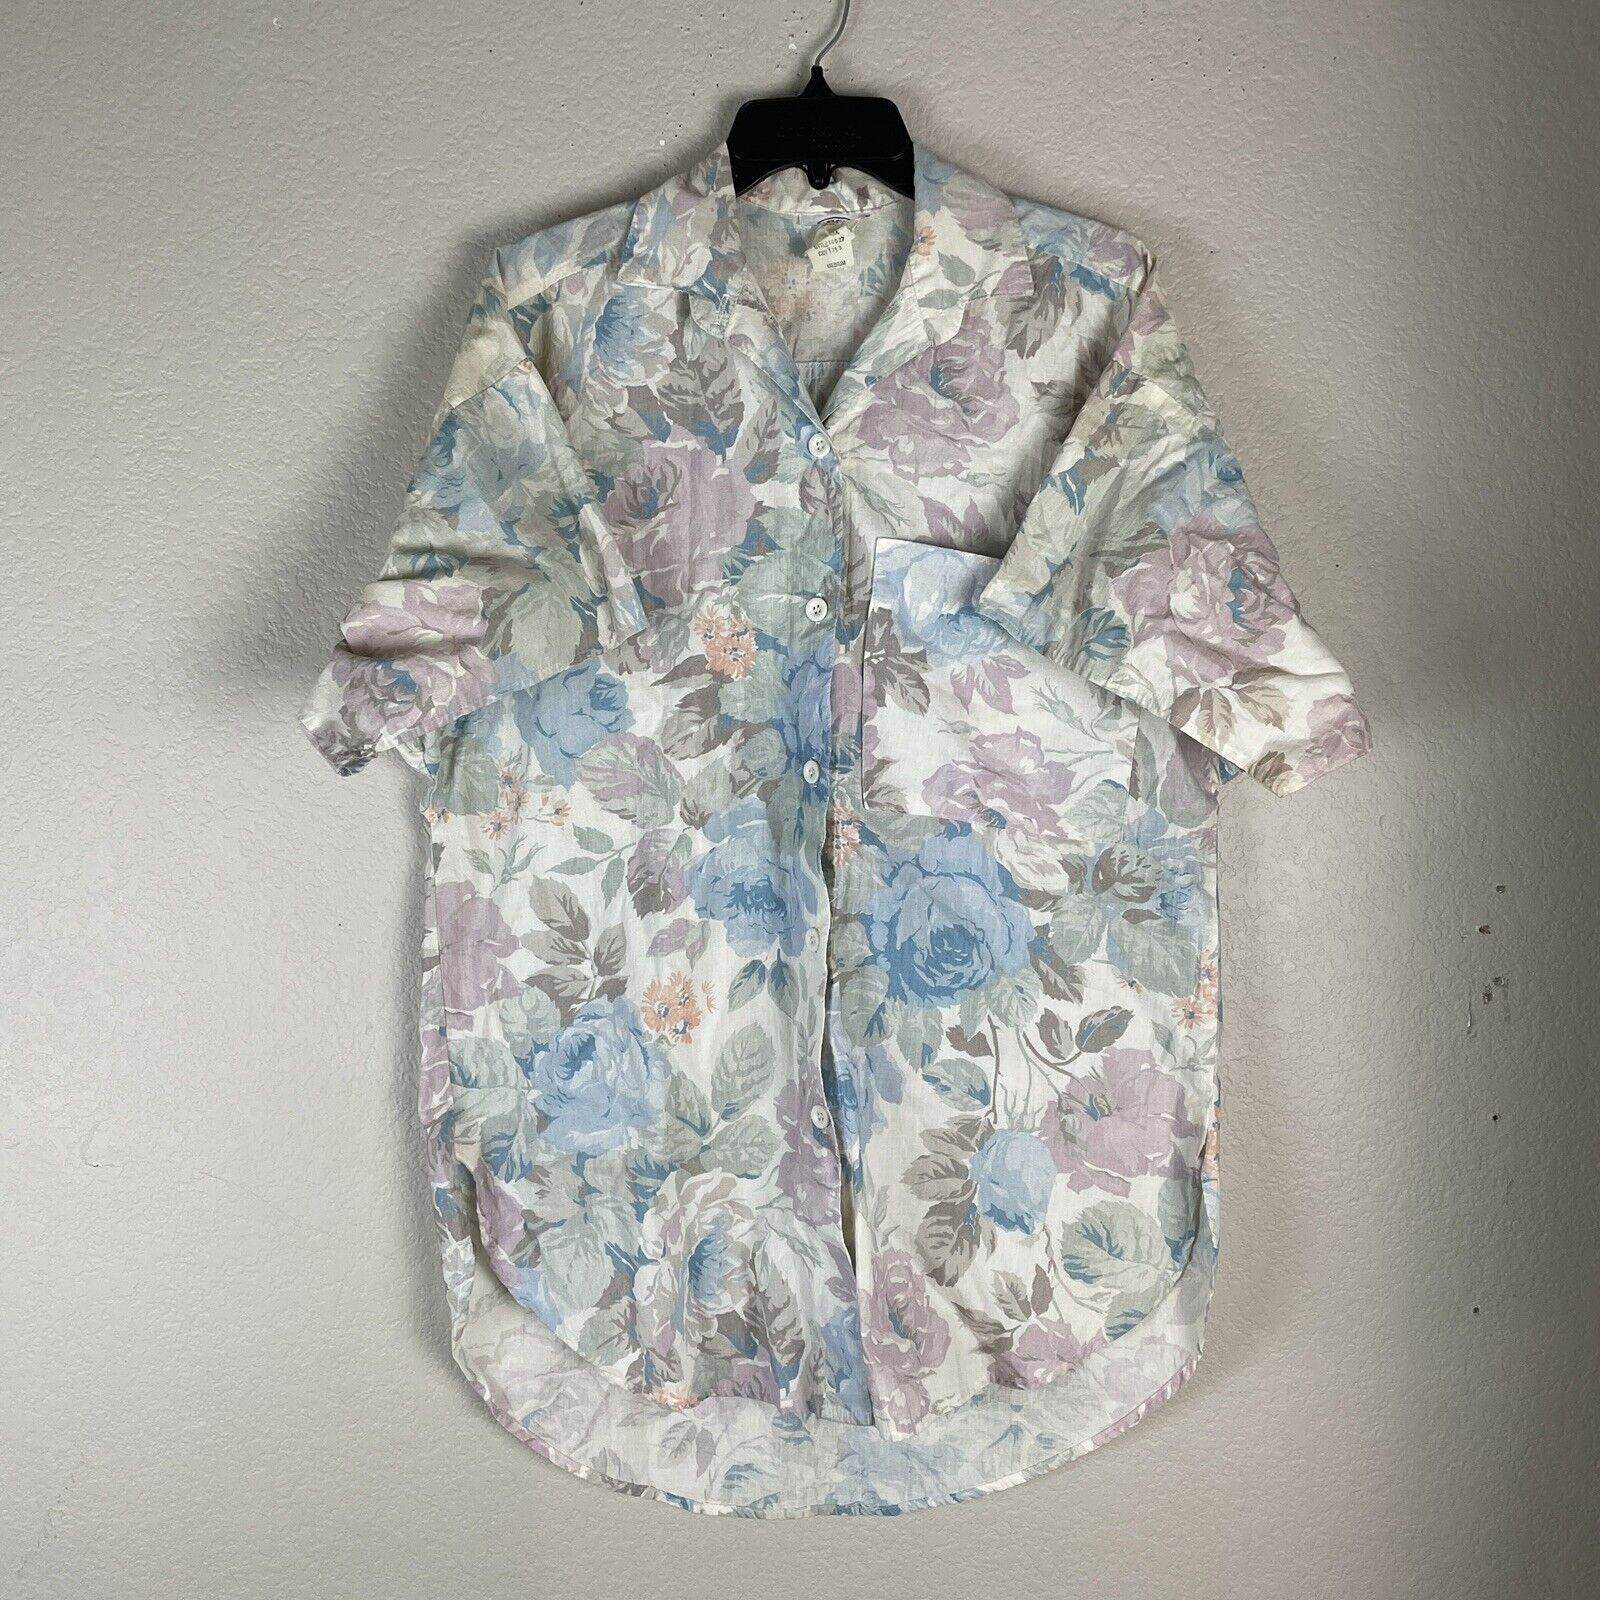 Vintage Floral Button Up Shirt Size Medium